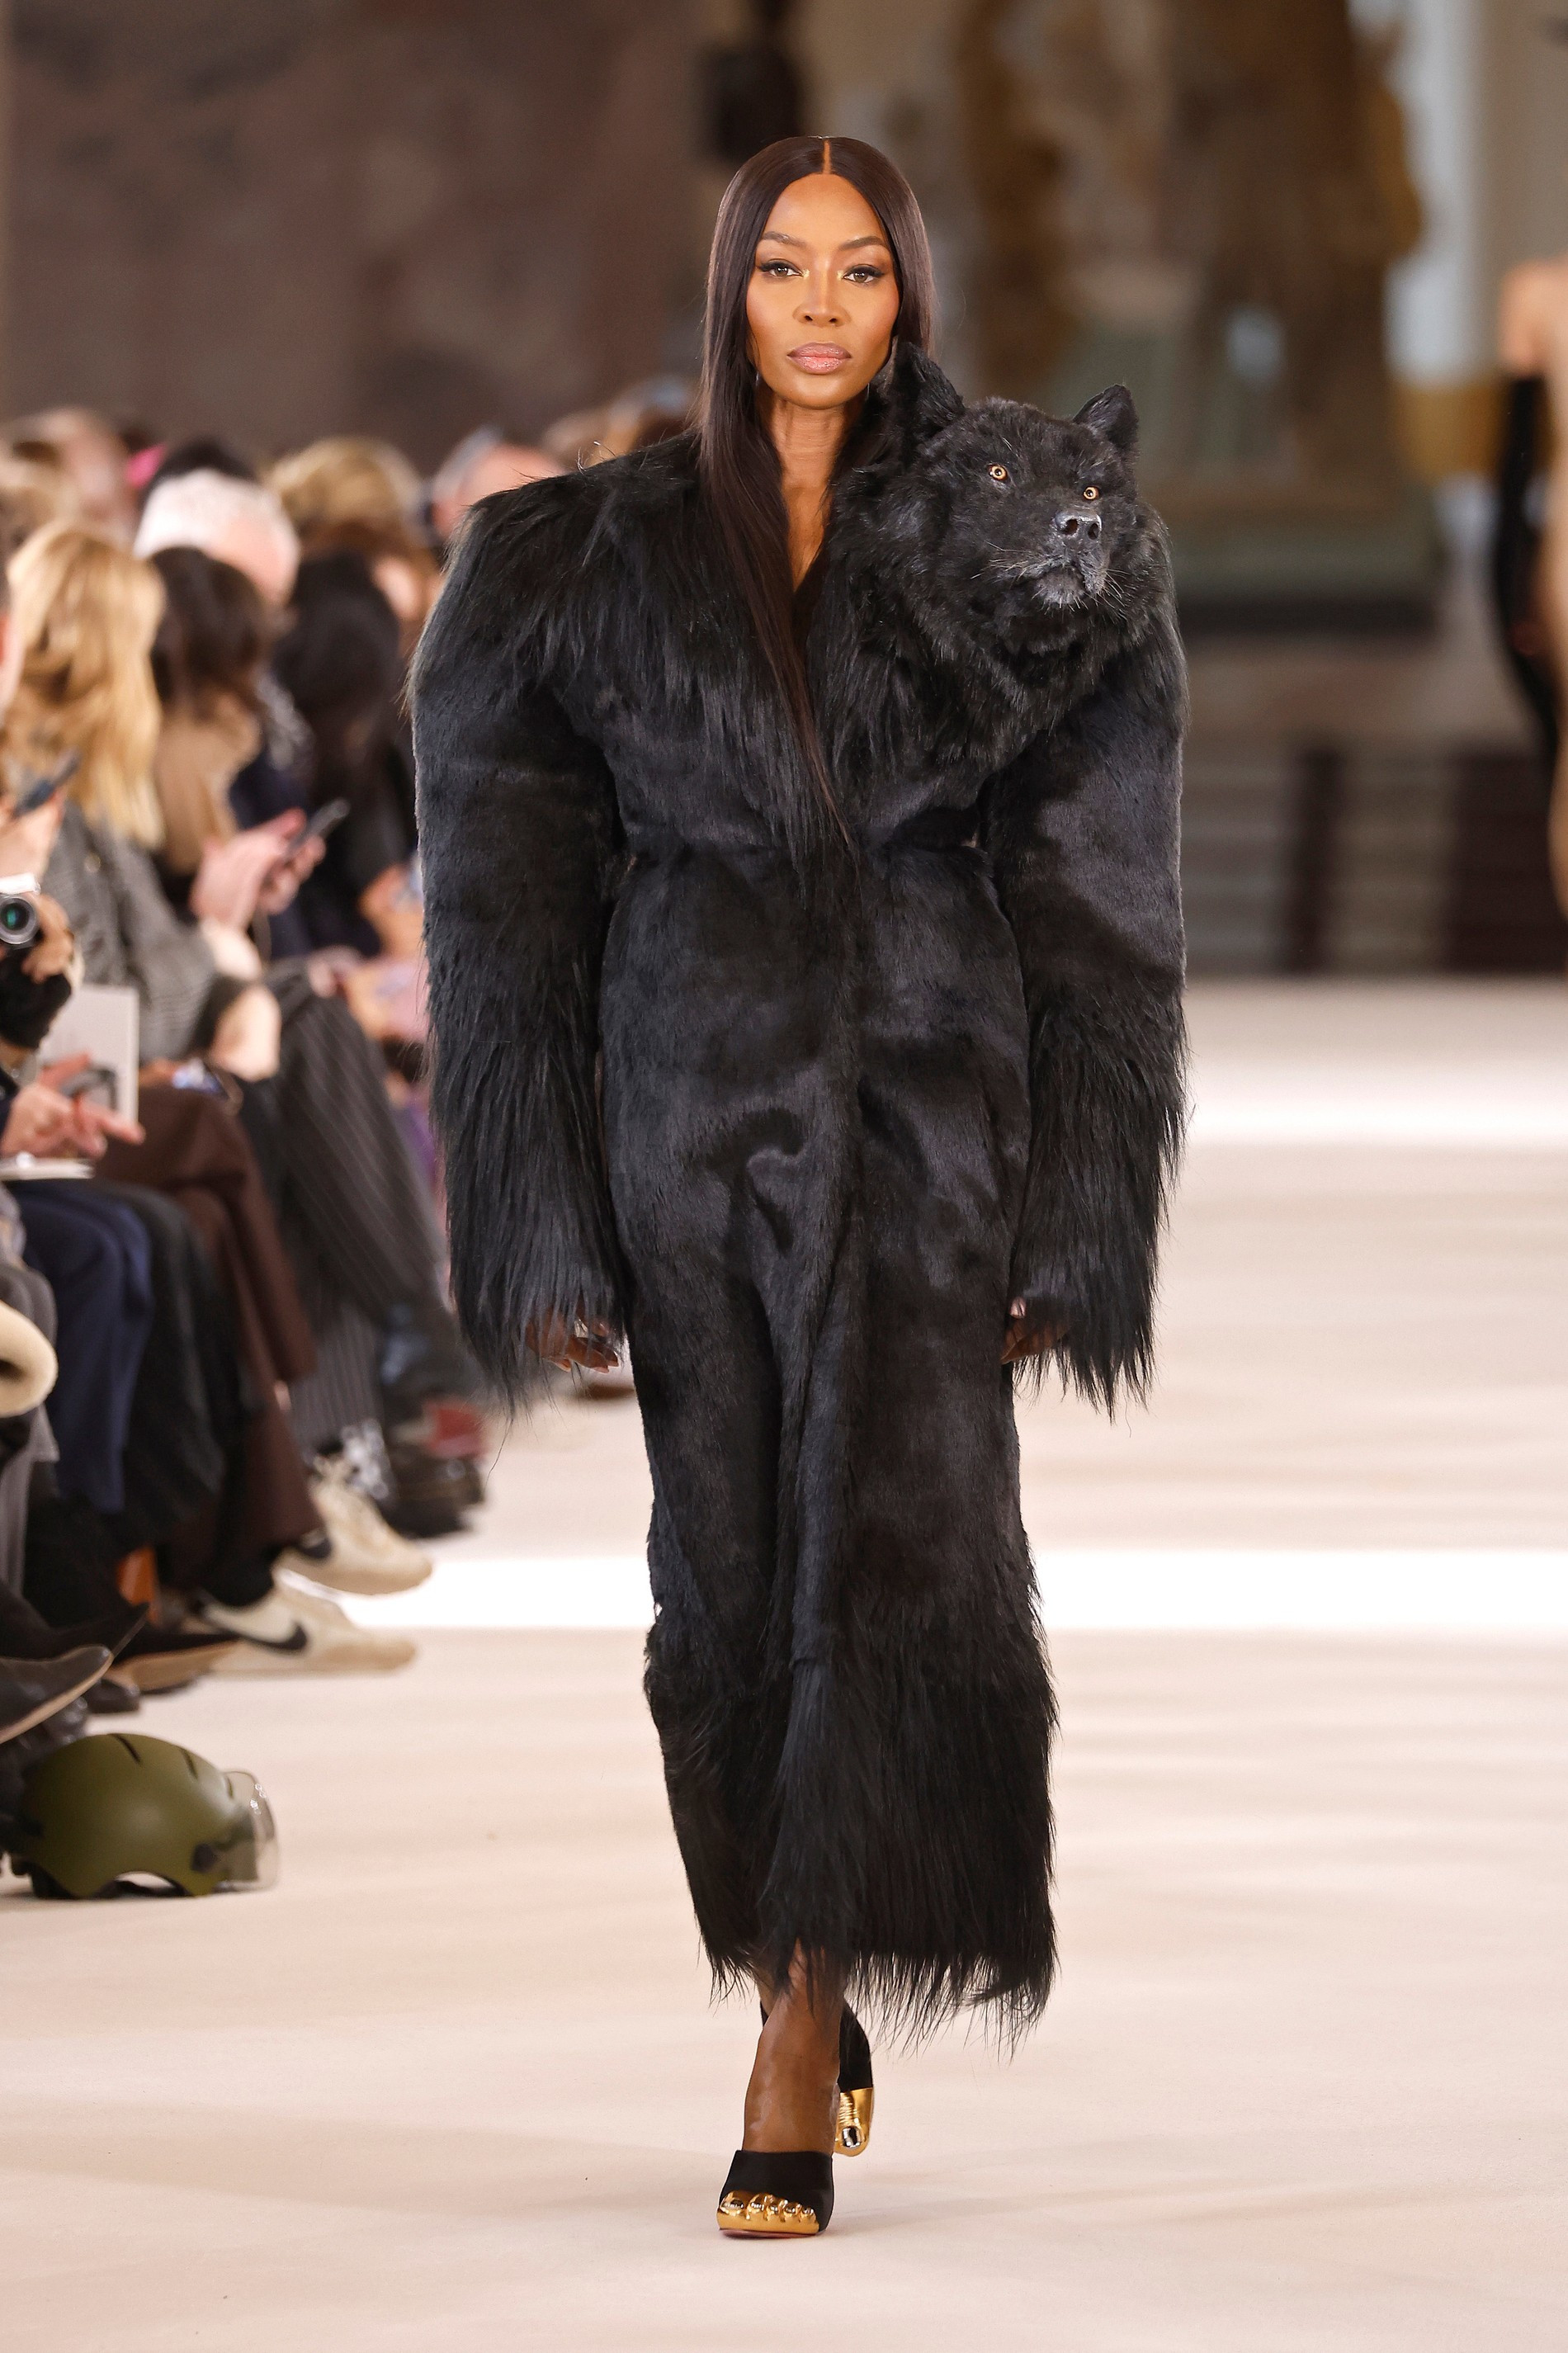 Наоми Кэмпбелл в образе волка на показе Schiaparelli Couture Spring 2023
Фото: Getty